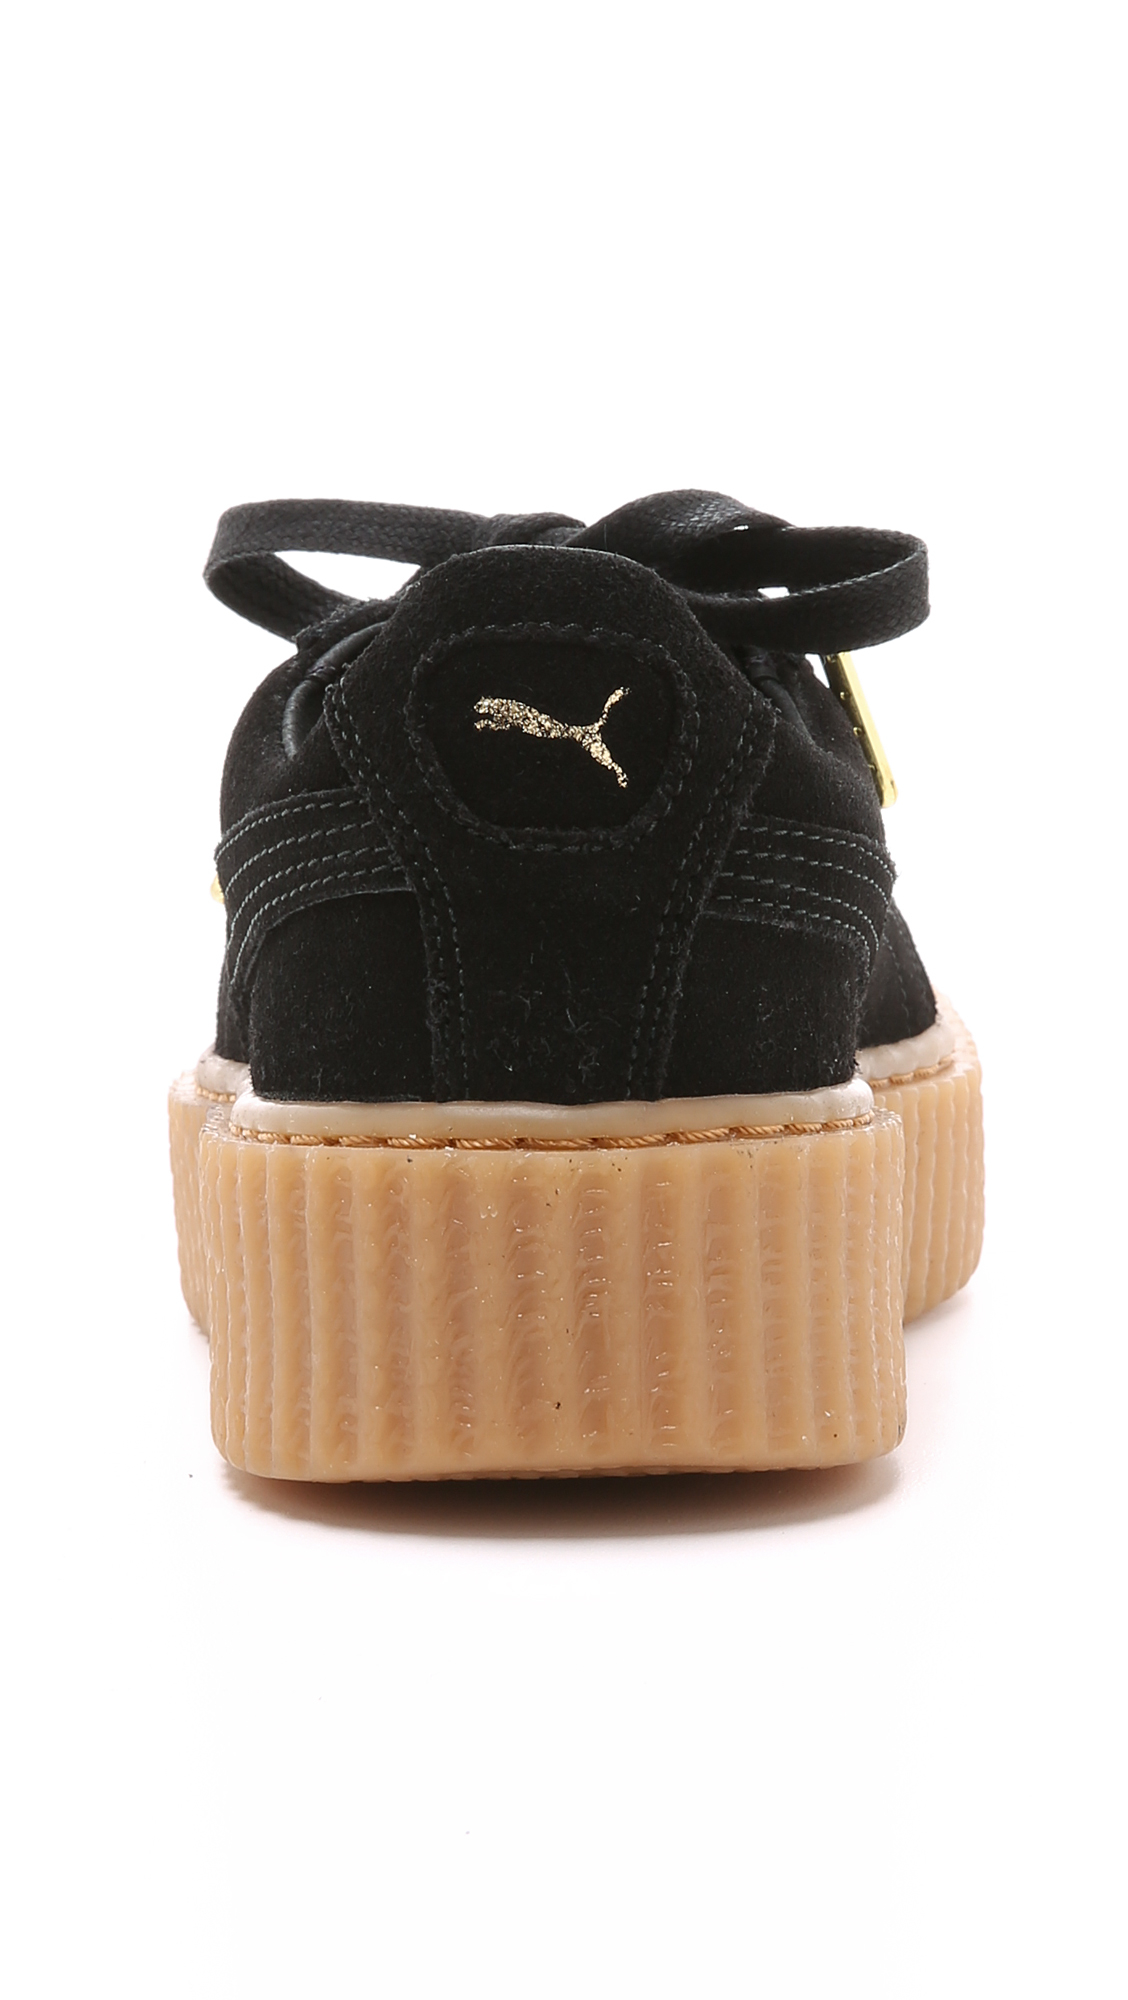 PUMA X Rihanna Creeper Sneakers - Black/gum - Lyst